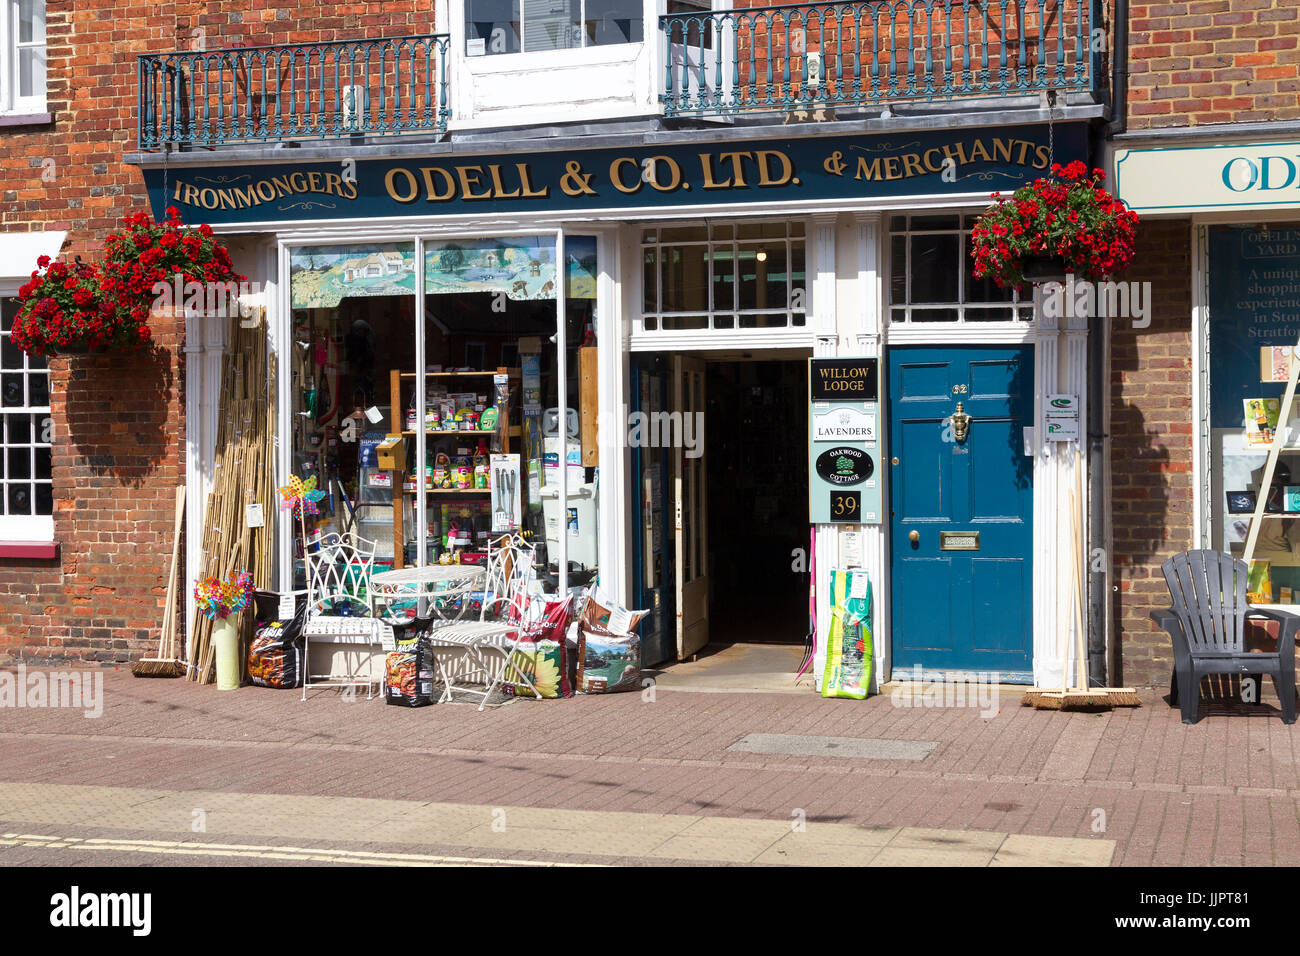 Odell & Co. ltd shop front on the High Street, Stony Stratford, Buckinghamshire, uk Stock Photo